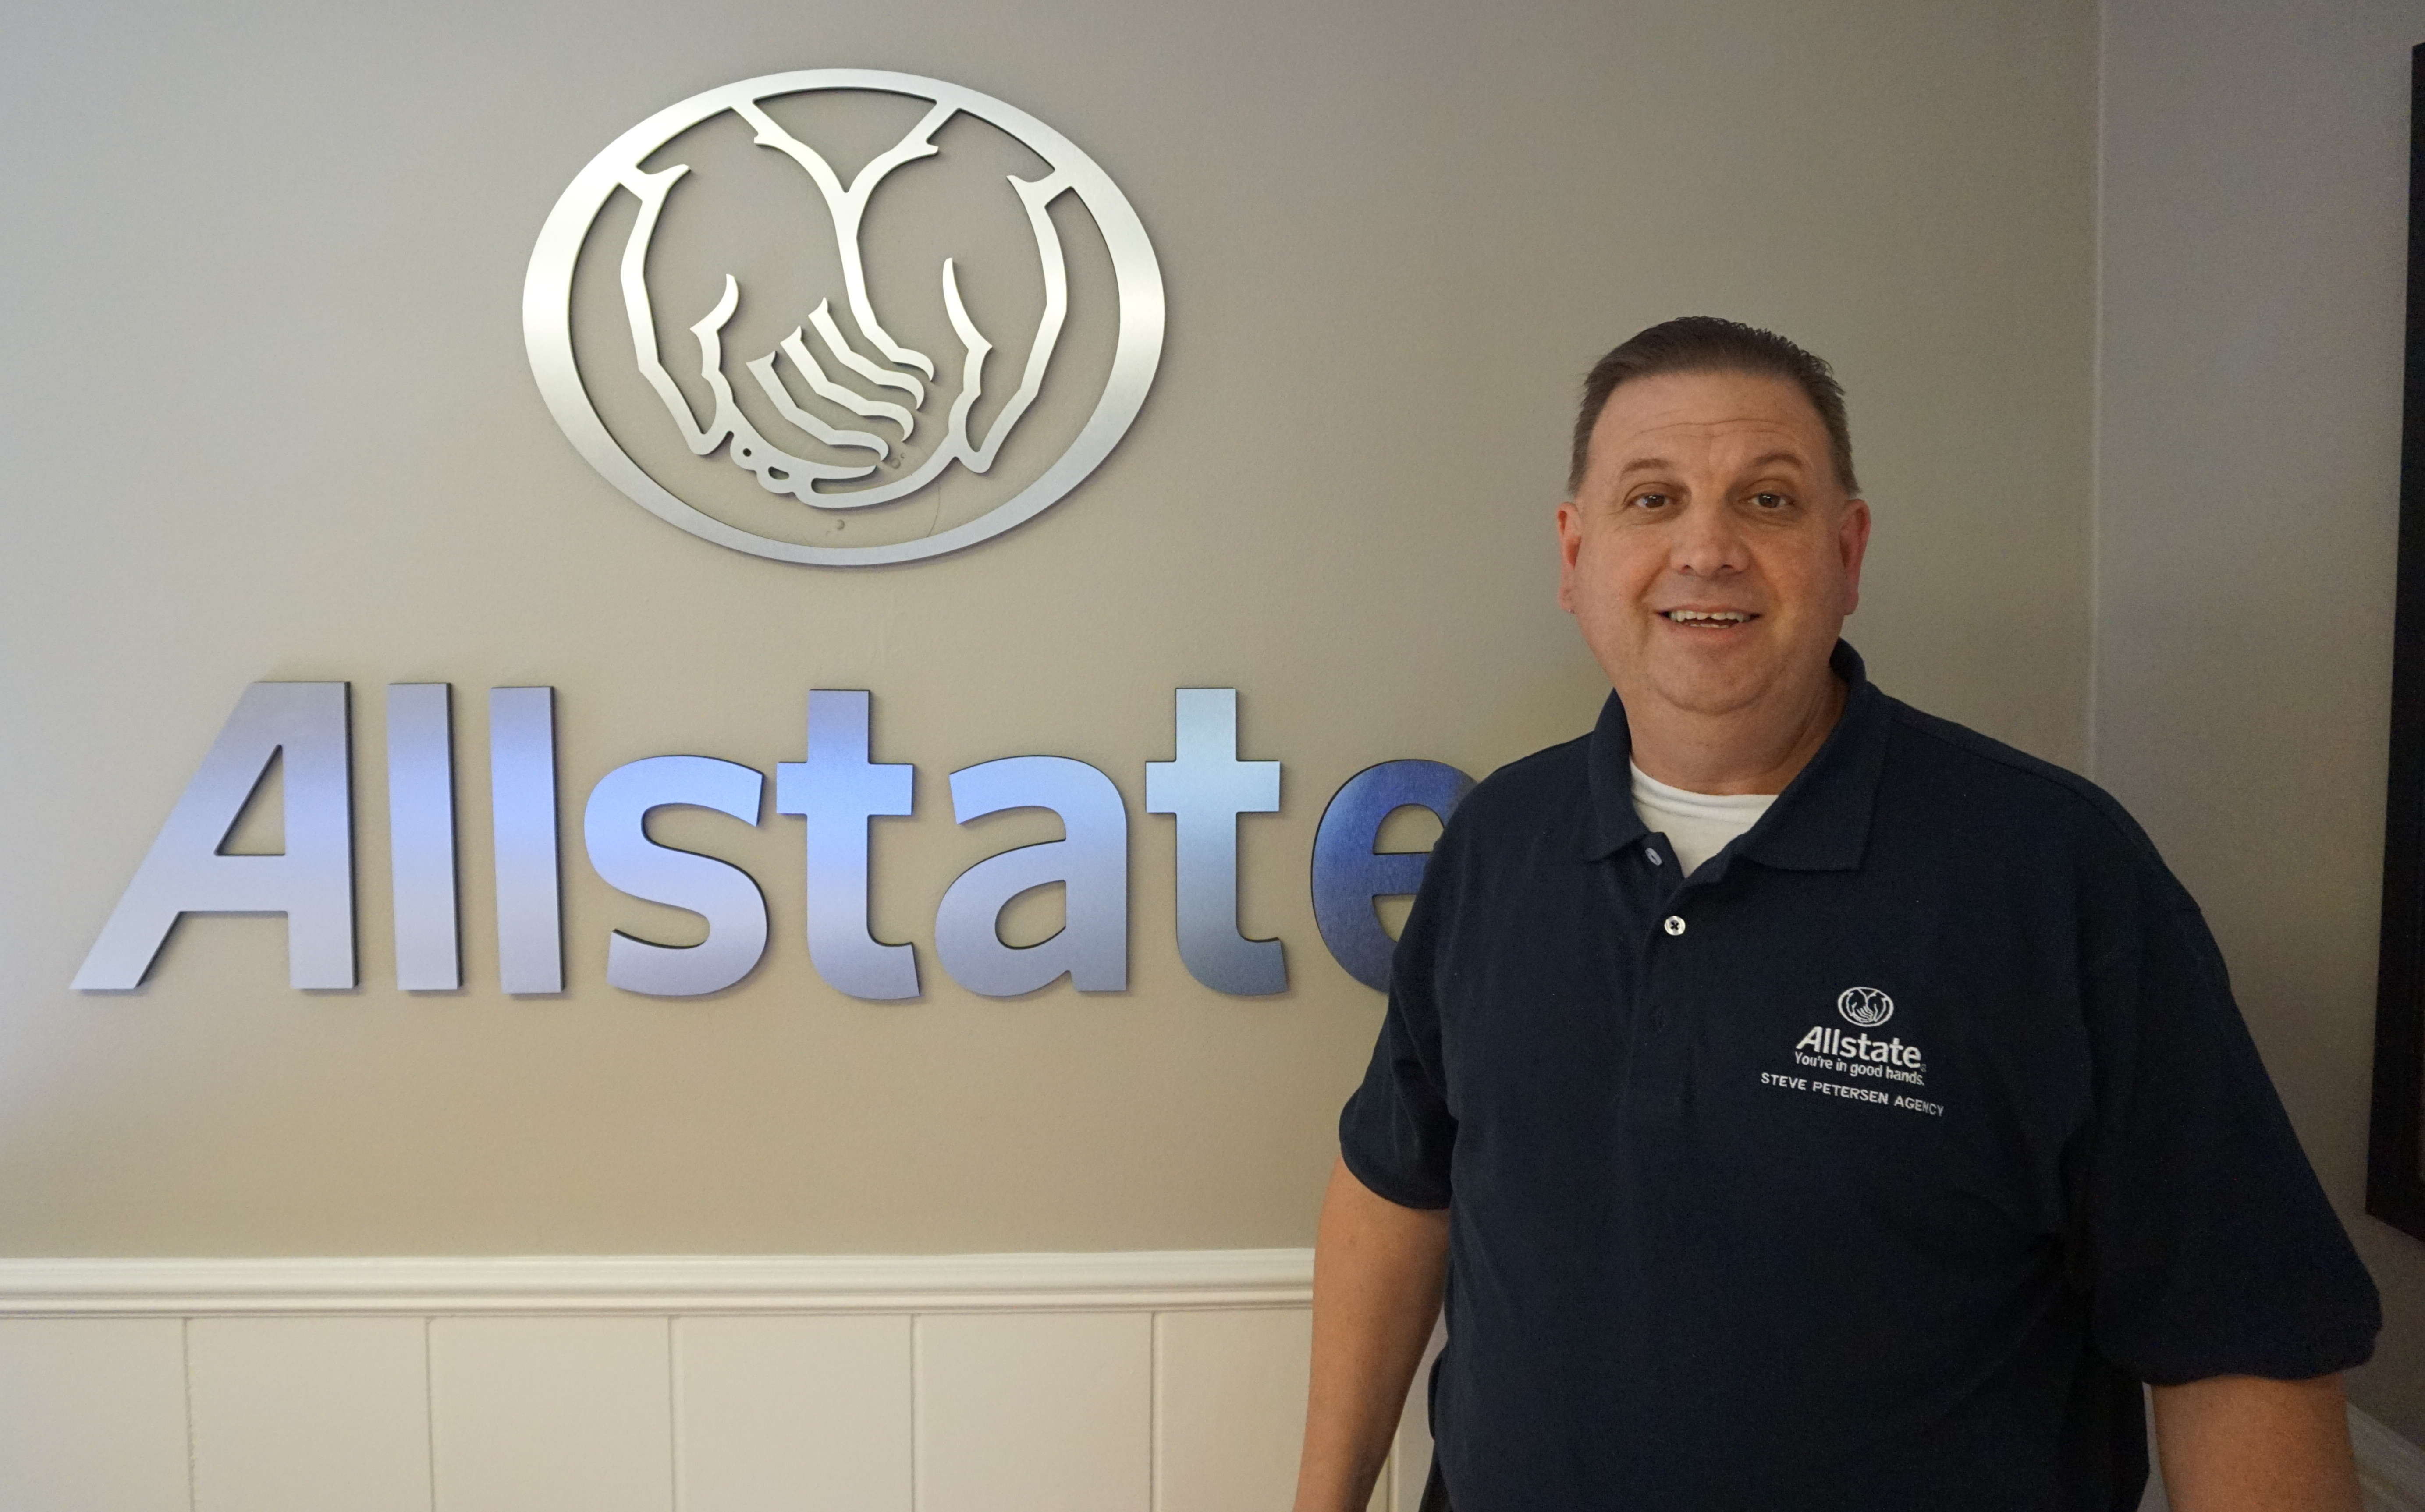 Steve Petersen Allstate Insurance Better Business Bureau® Profile